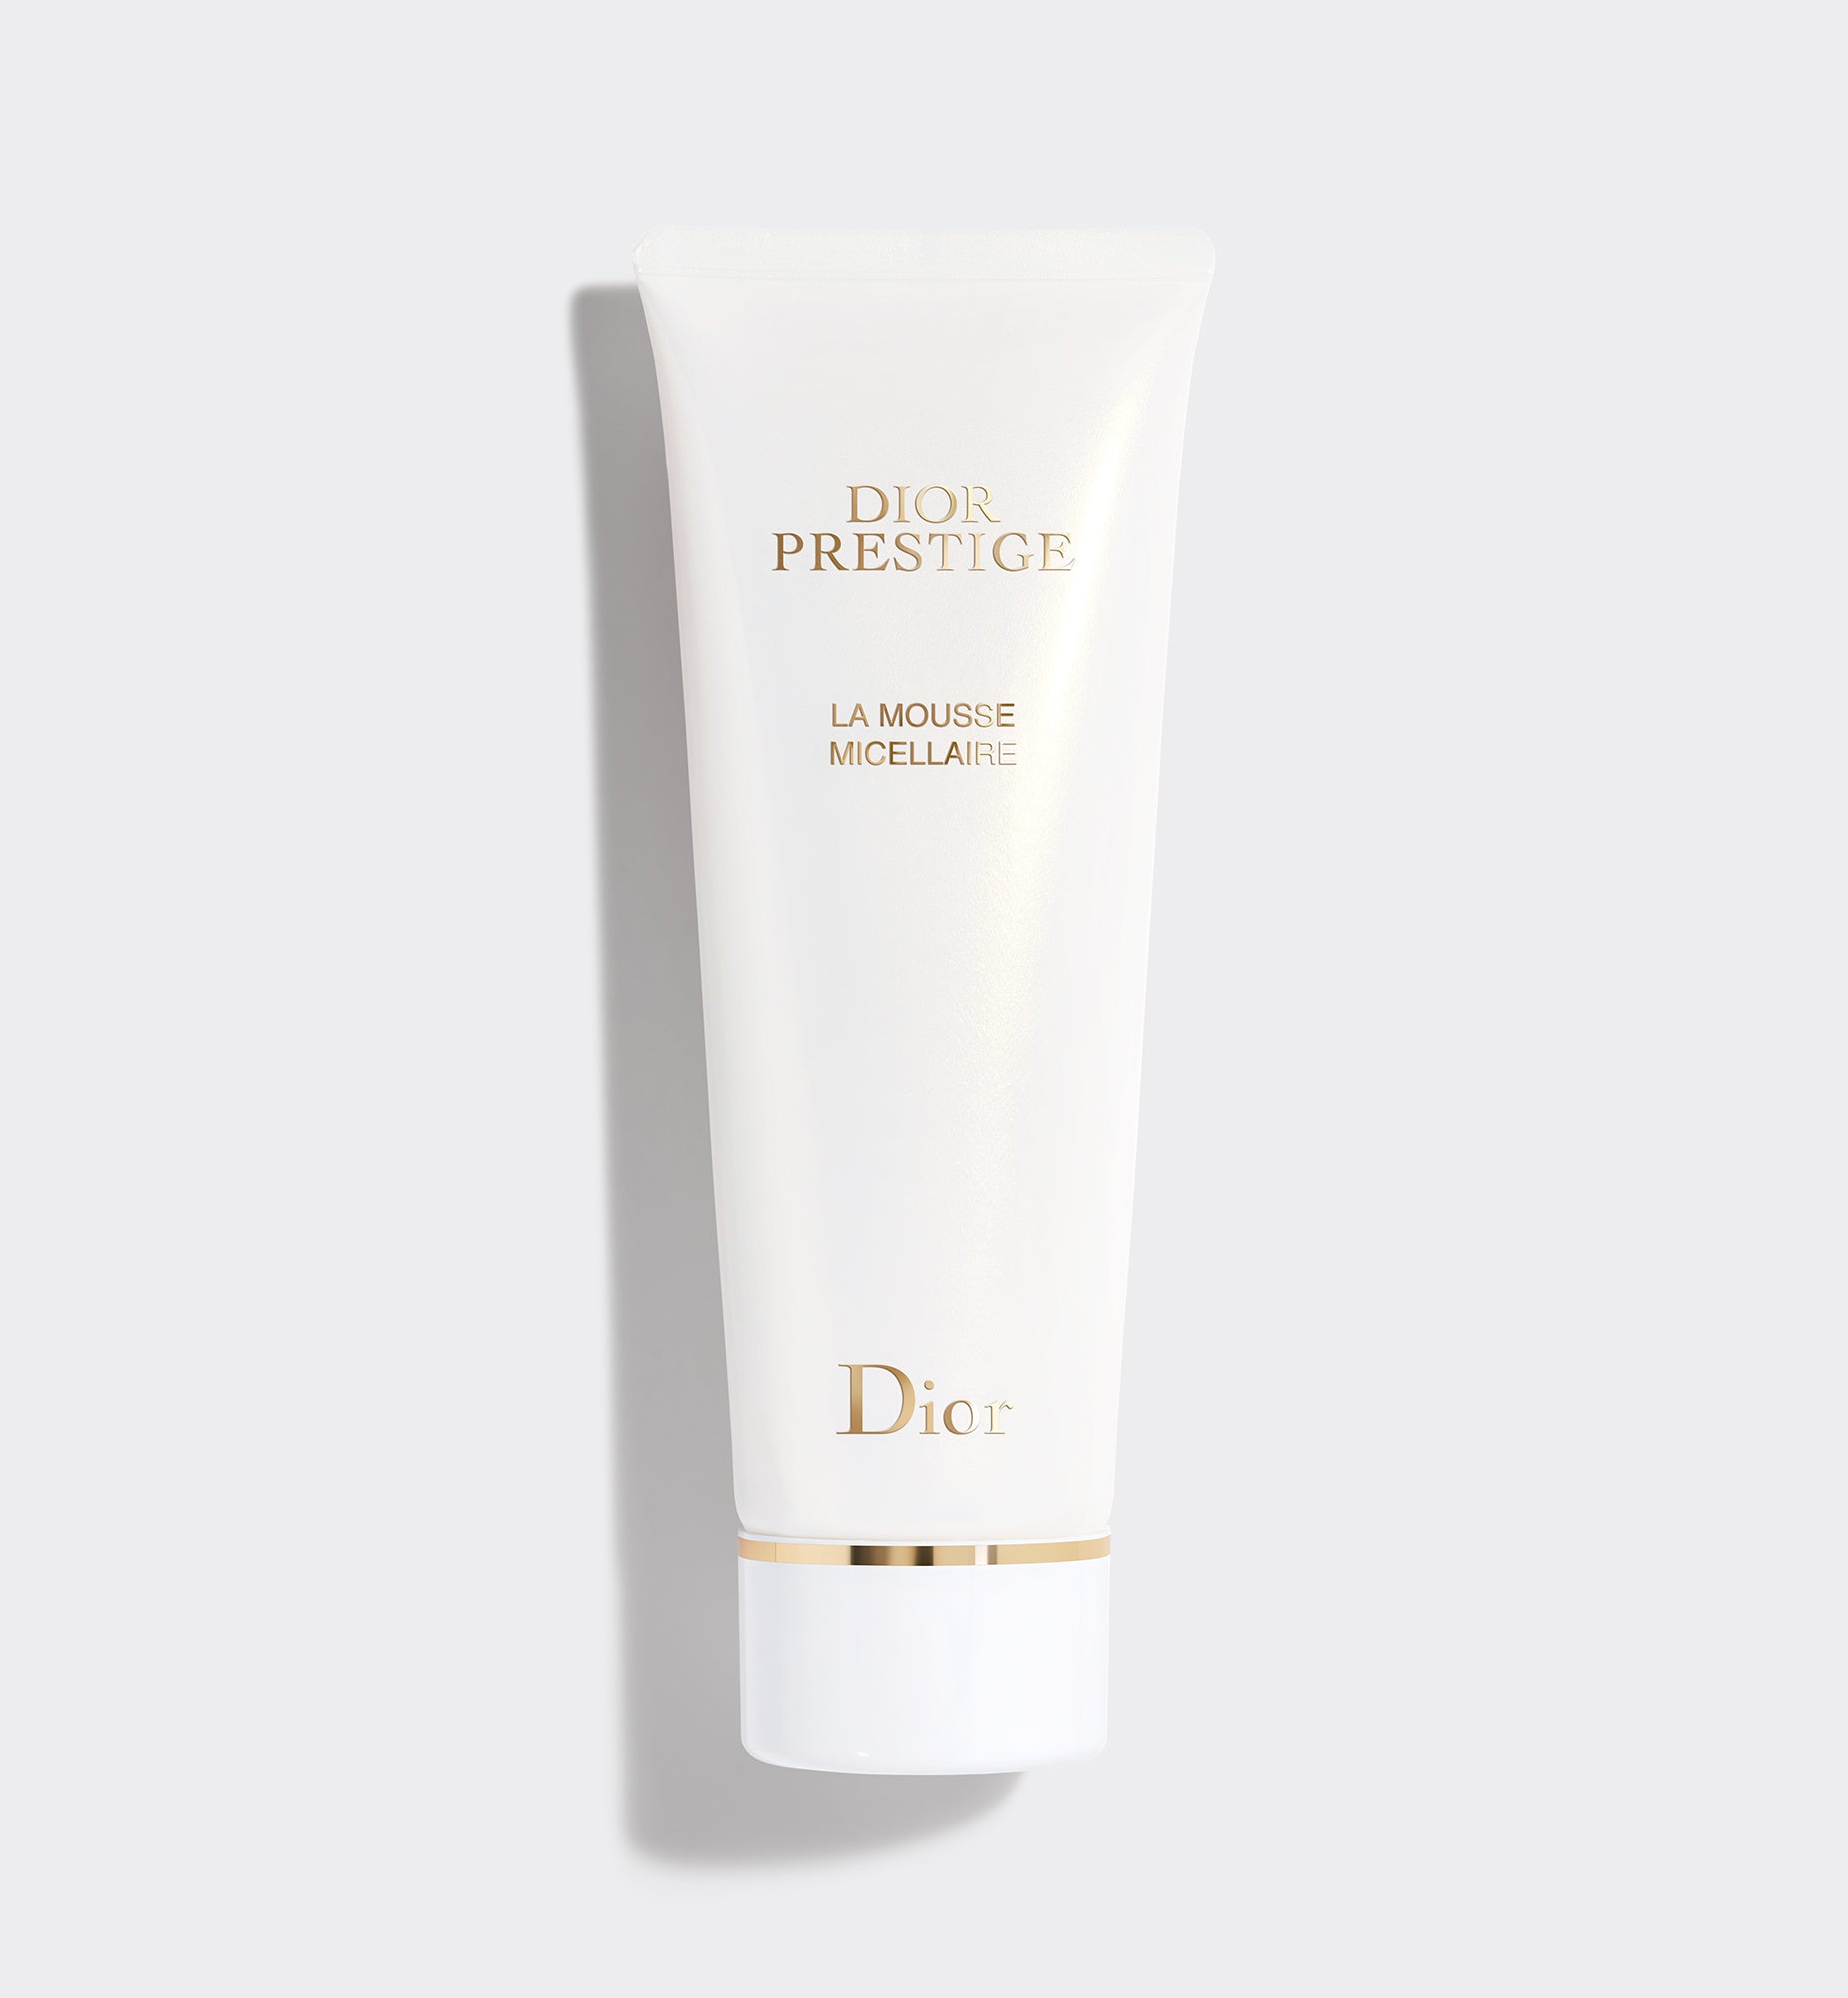 Dior Prestige La Mousse Micellaire | Face Cleanser - Foam Texture - Exceptionally Gentle